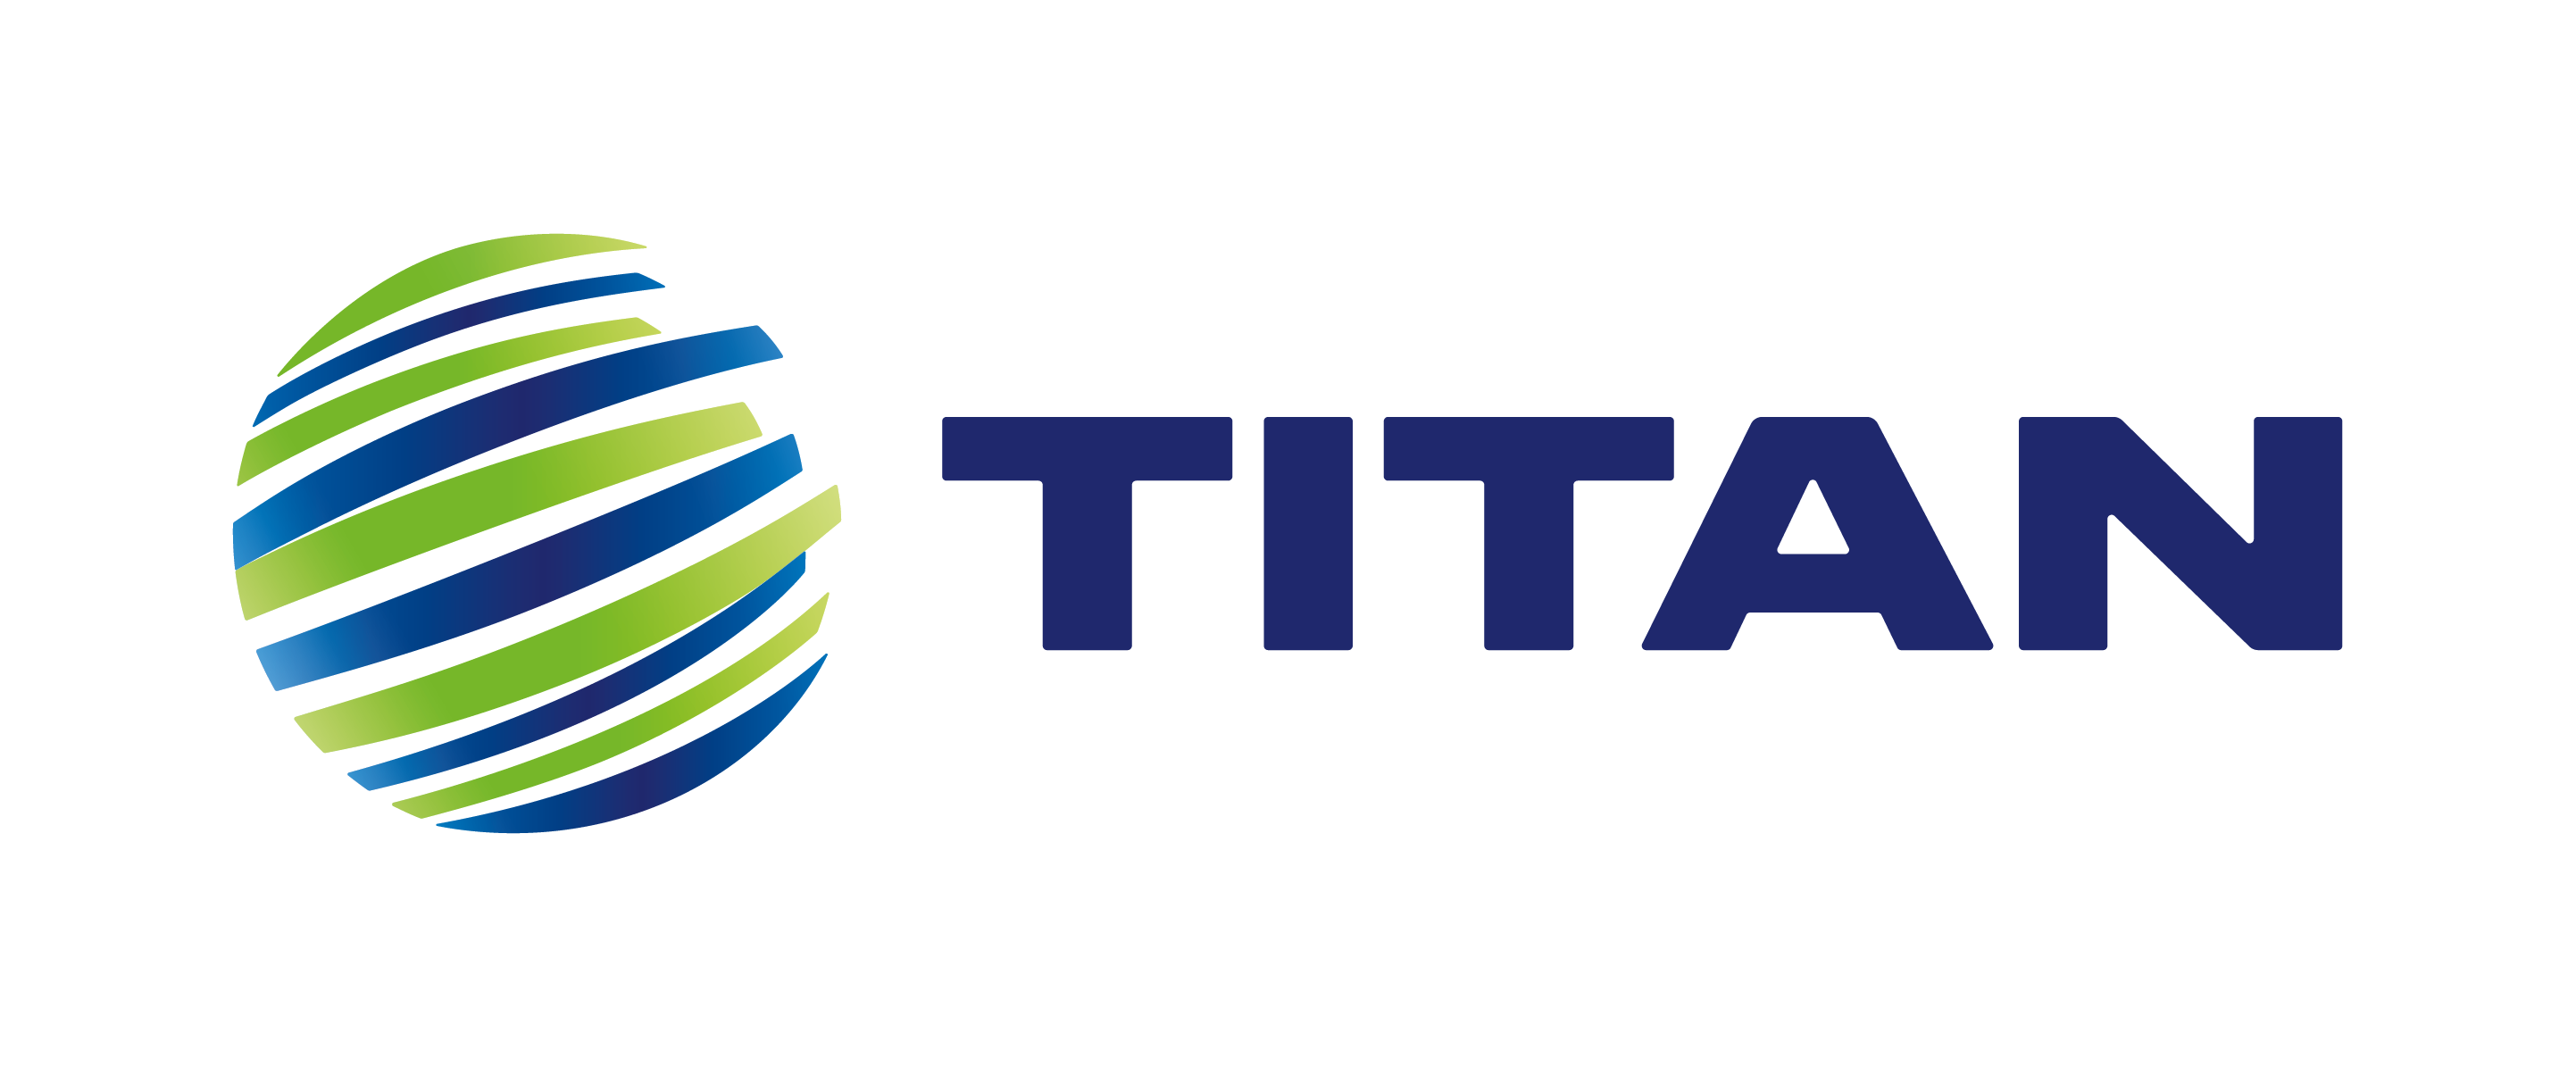 TITAN Cement logo